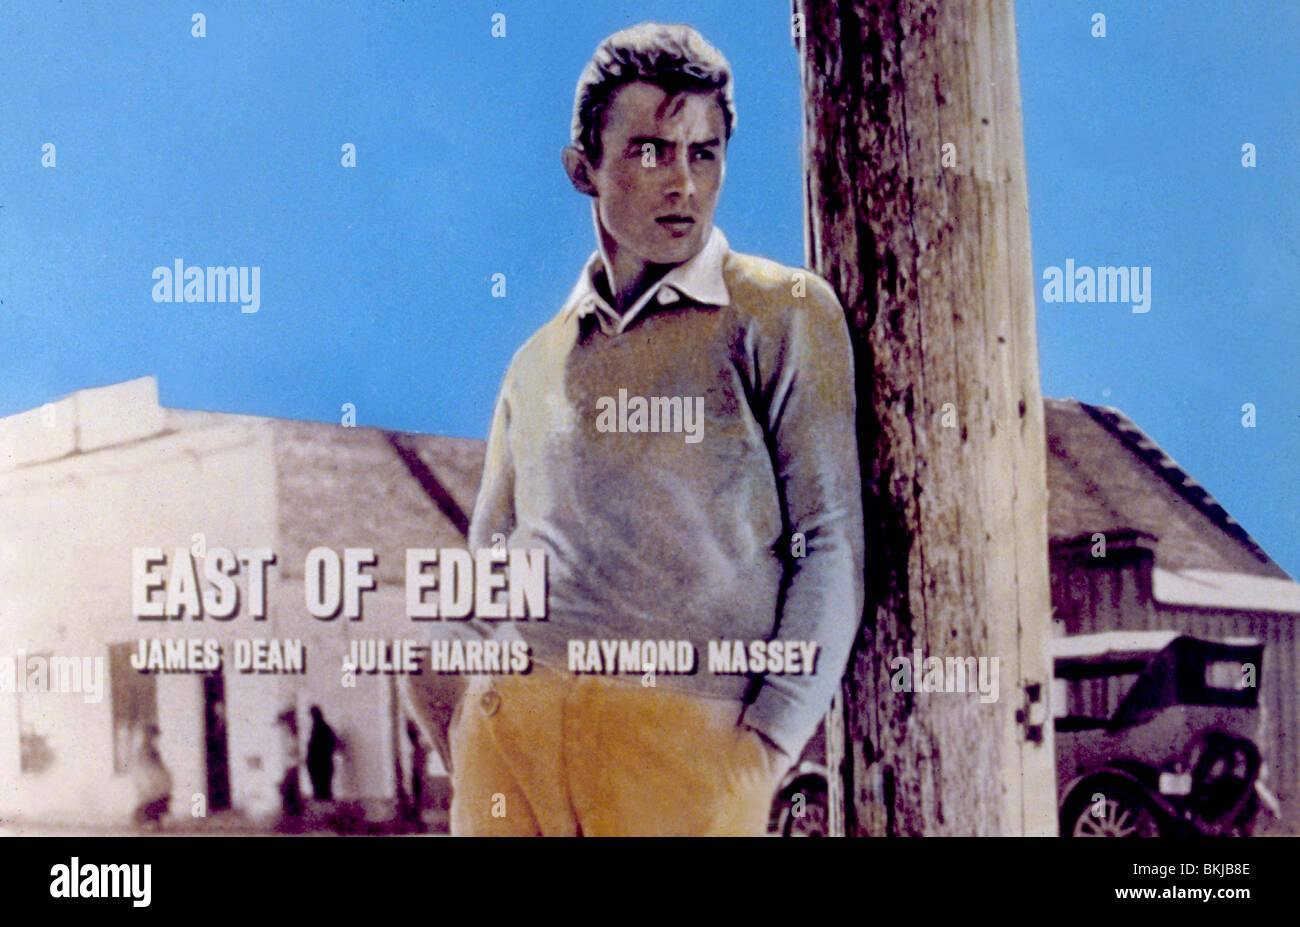 EAST OF EDEN -1955 JAMES DEAN Stock Photo